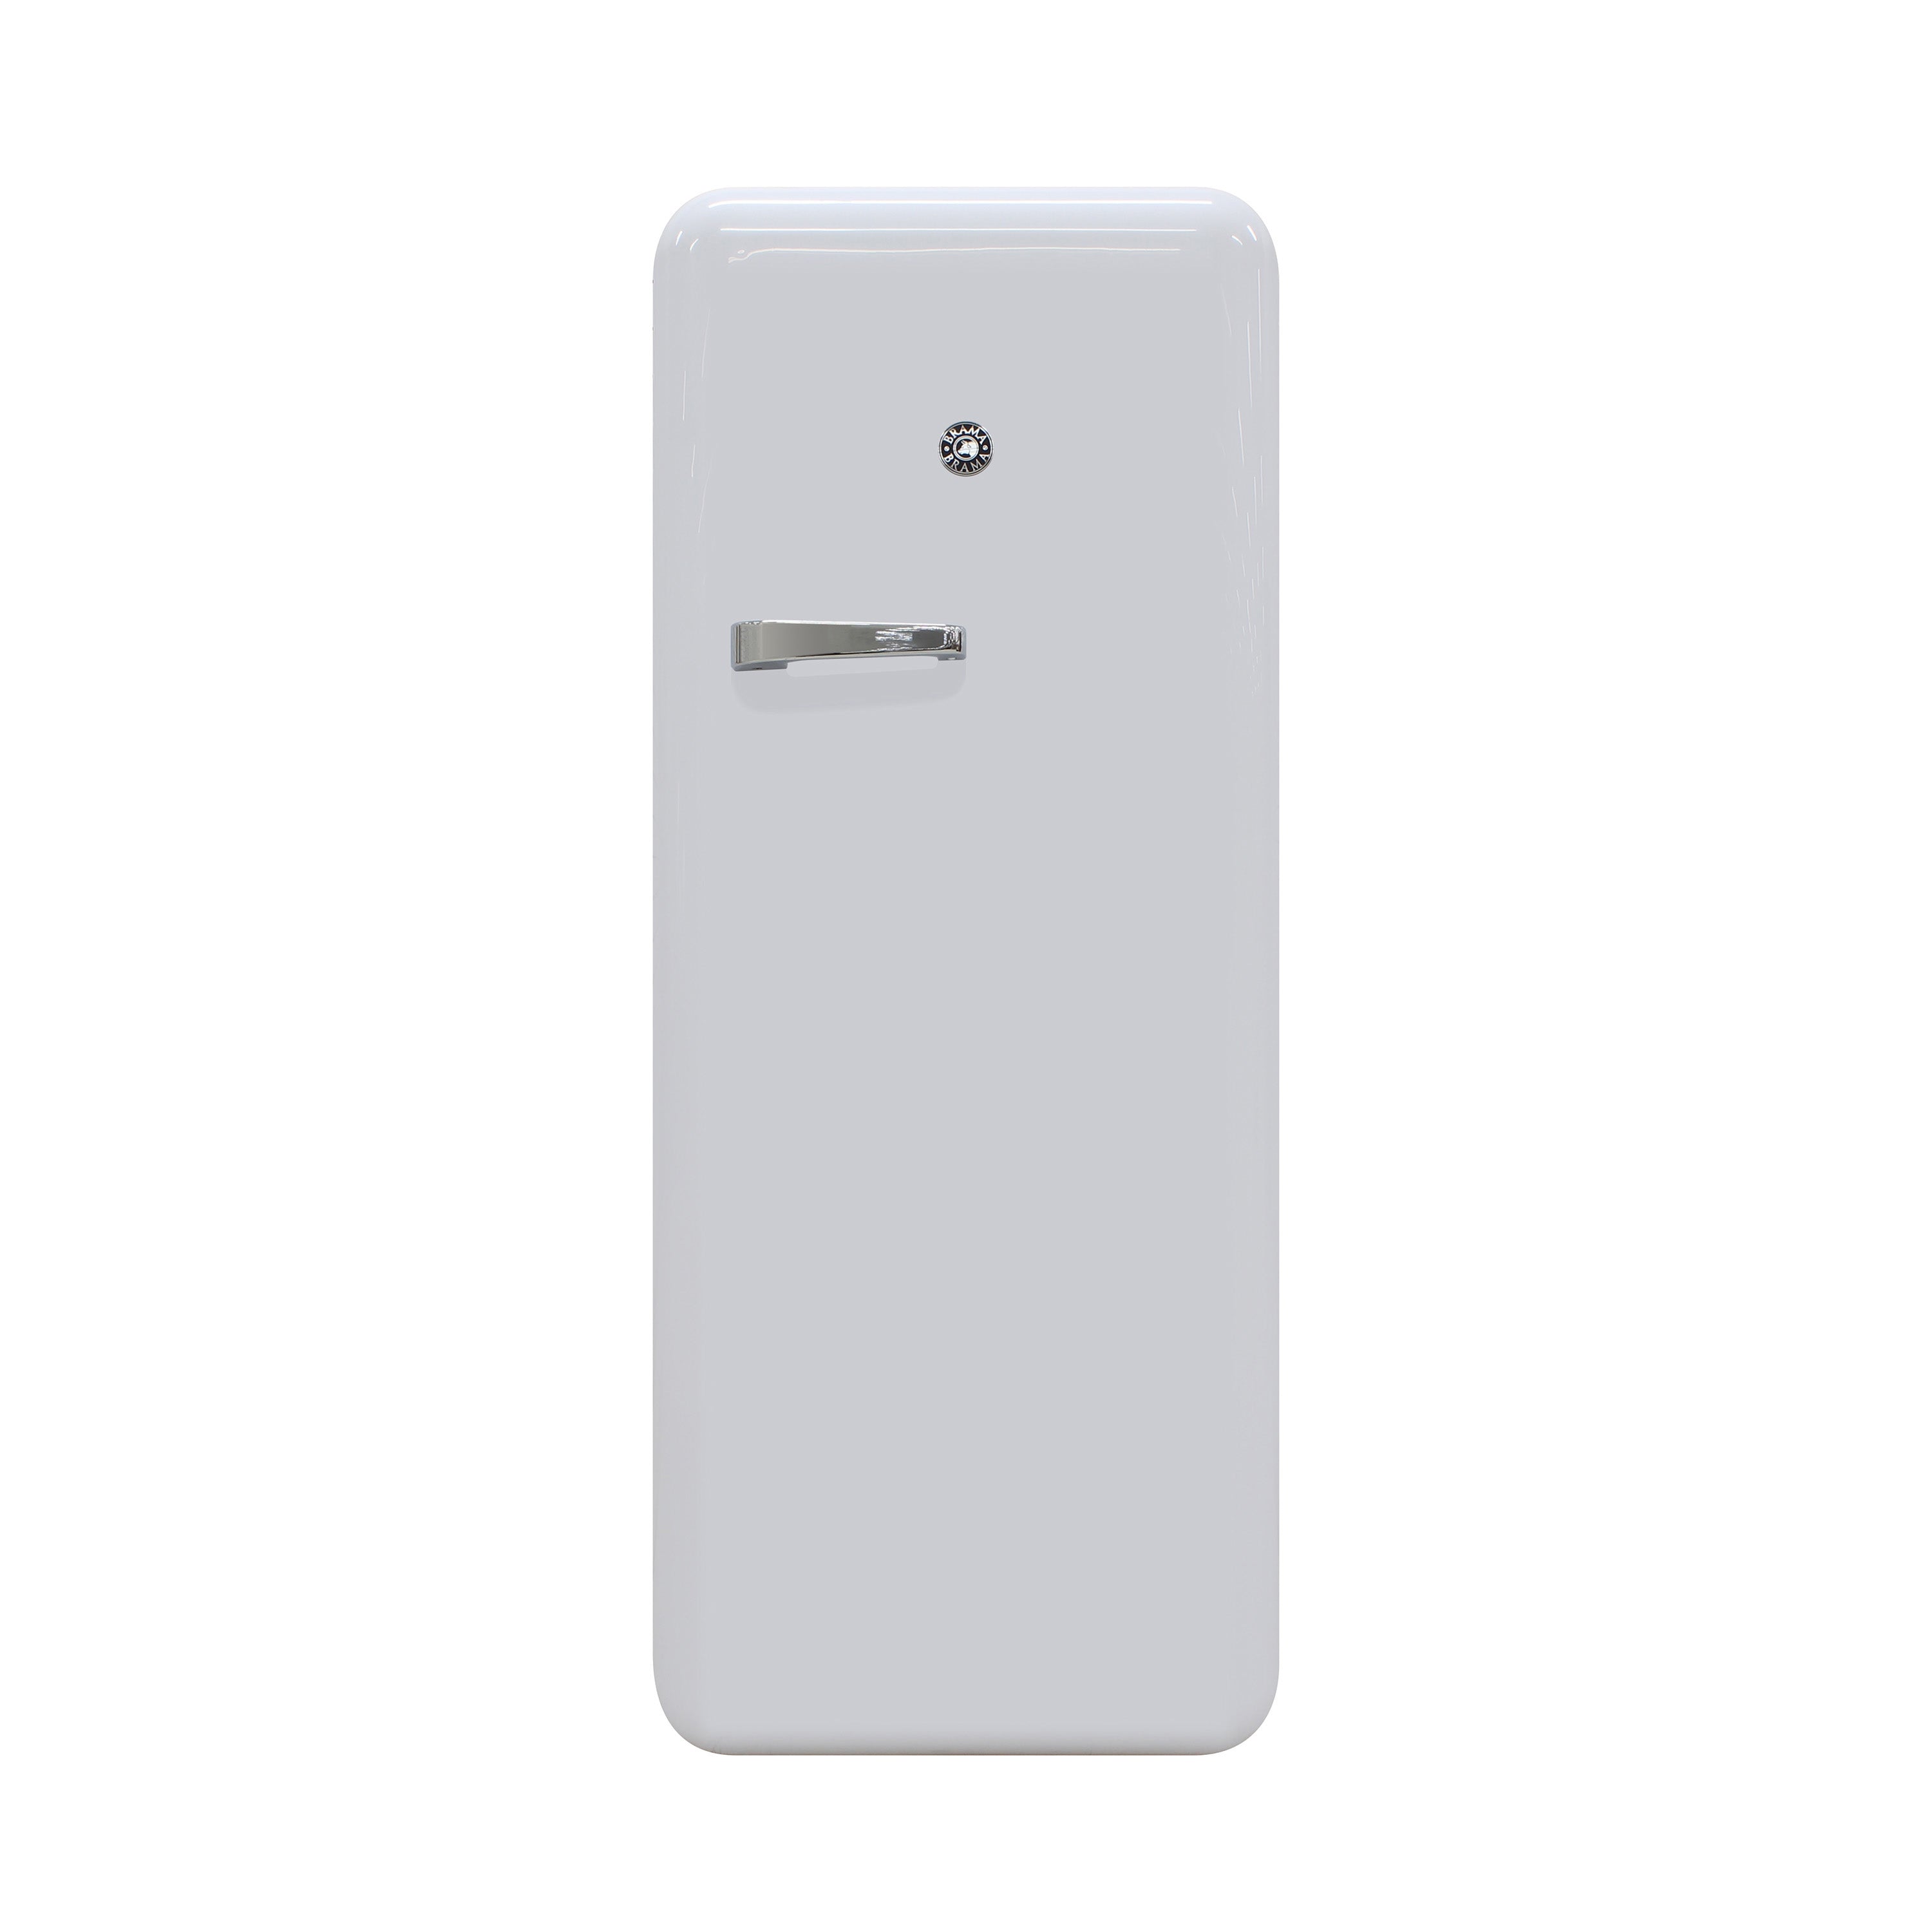 Vinotemp - BR-RETRO-01-W, Brama by Vinotemp Retro Refrigerator with Solid Steel Door, in White